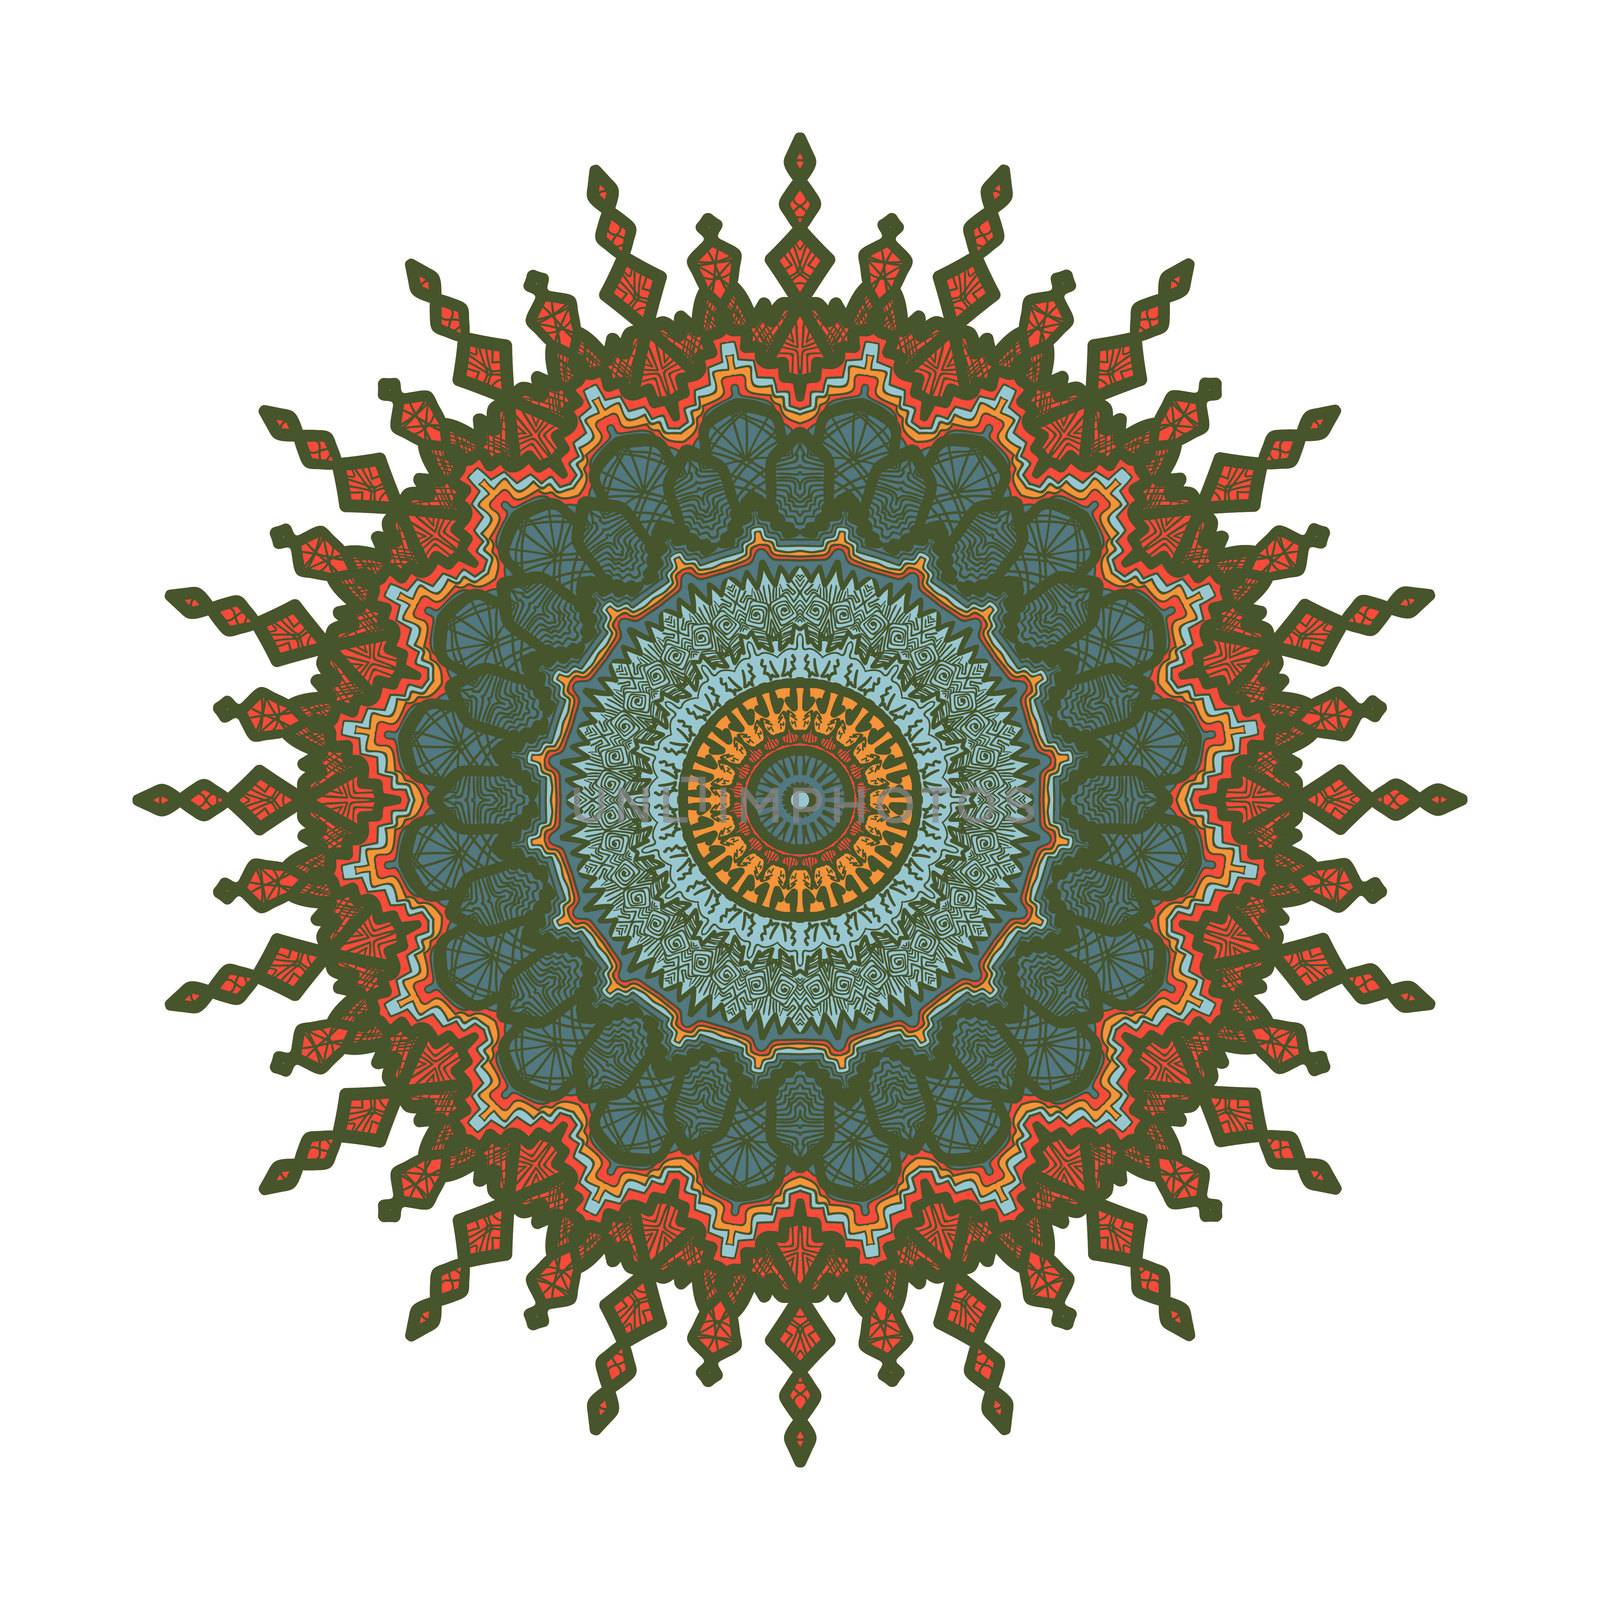 Mandala Line Template by barsrsind